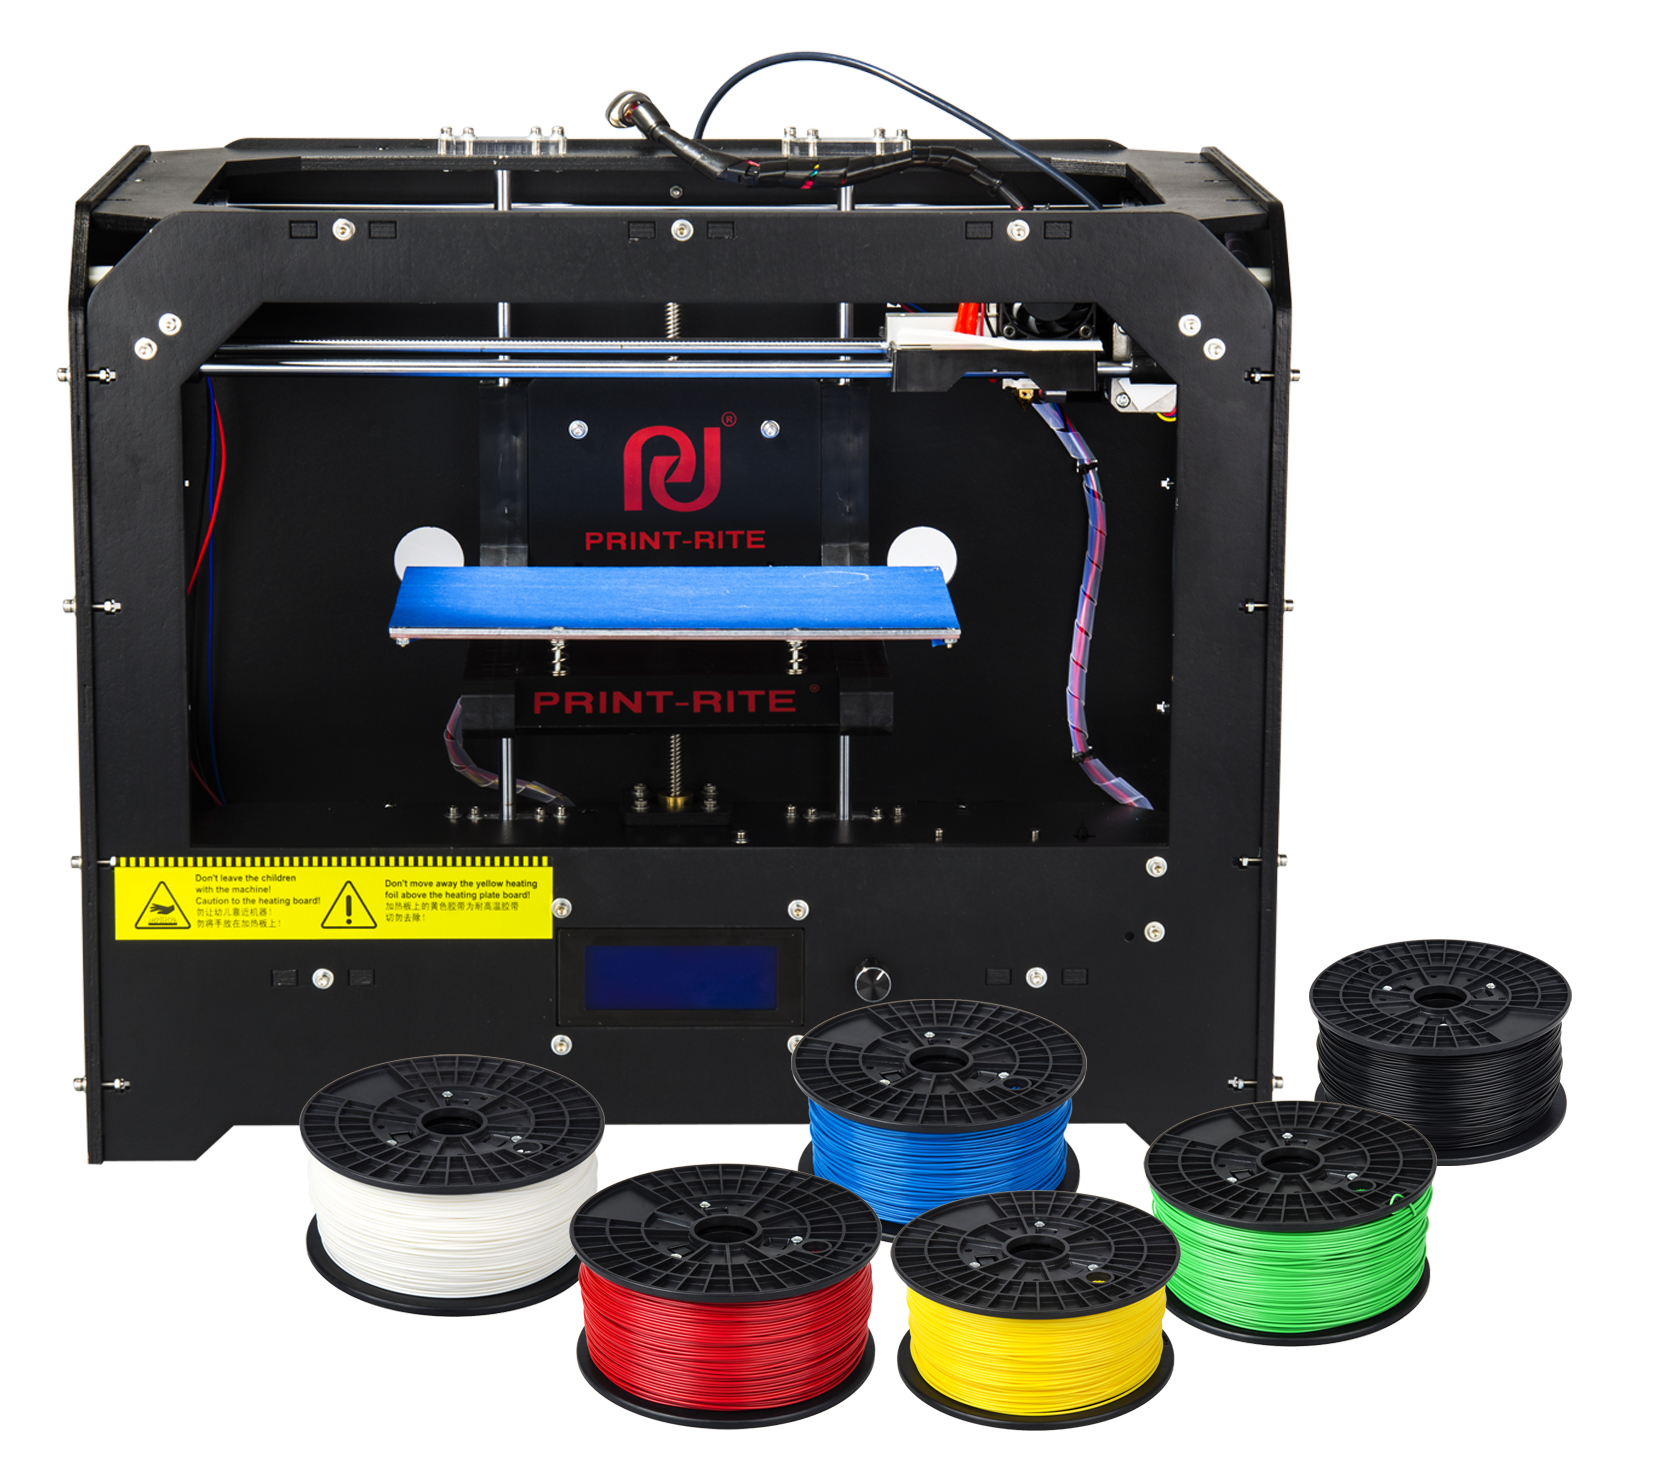 PrintRite CoLiDoTM Desktop 3D Printer and ABS/PLA Filaments Fulfill